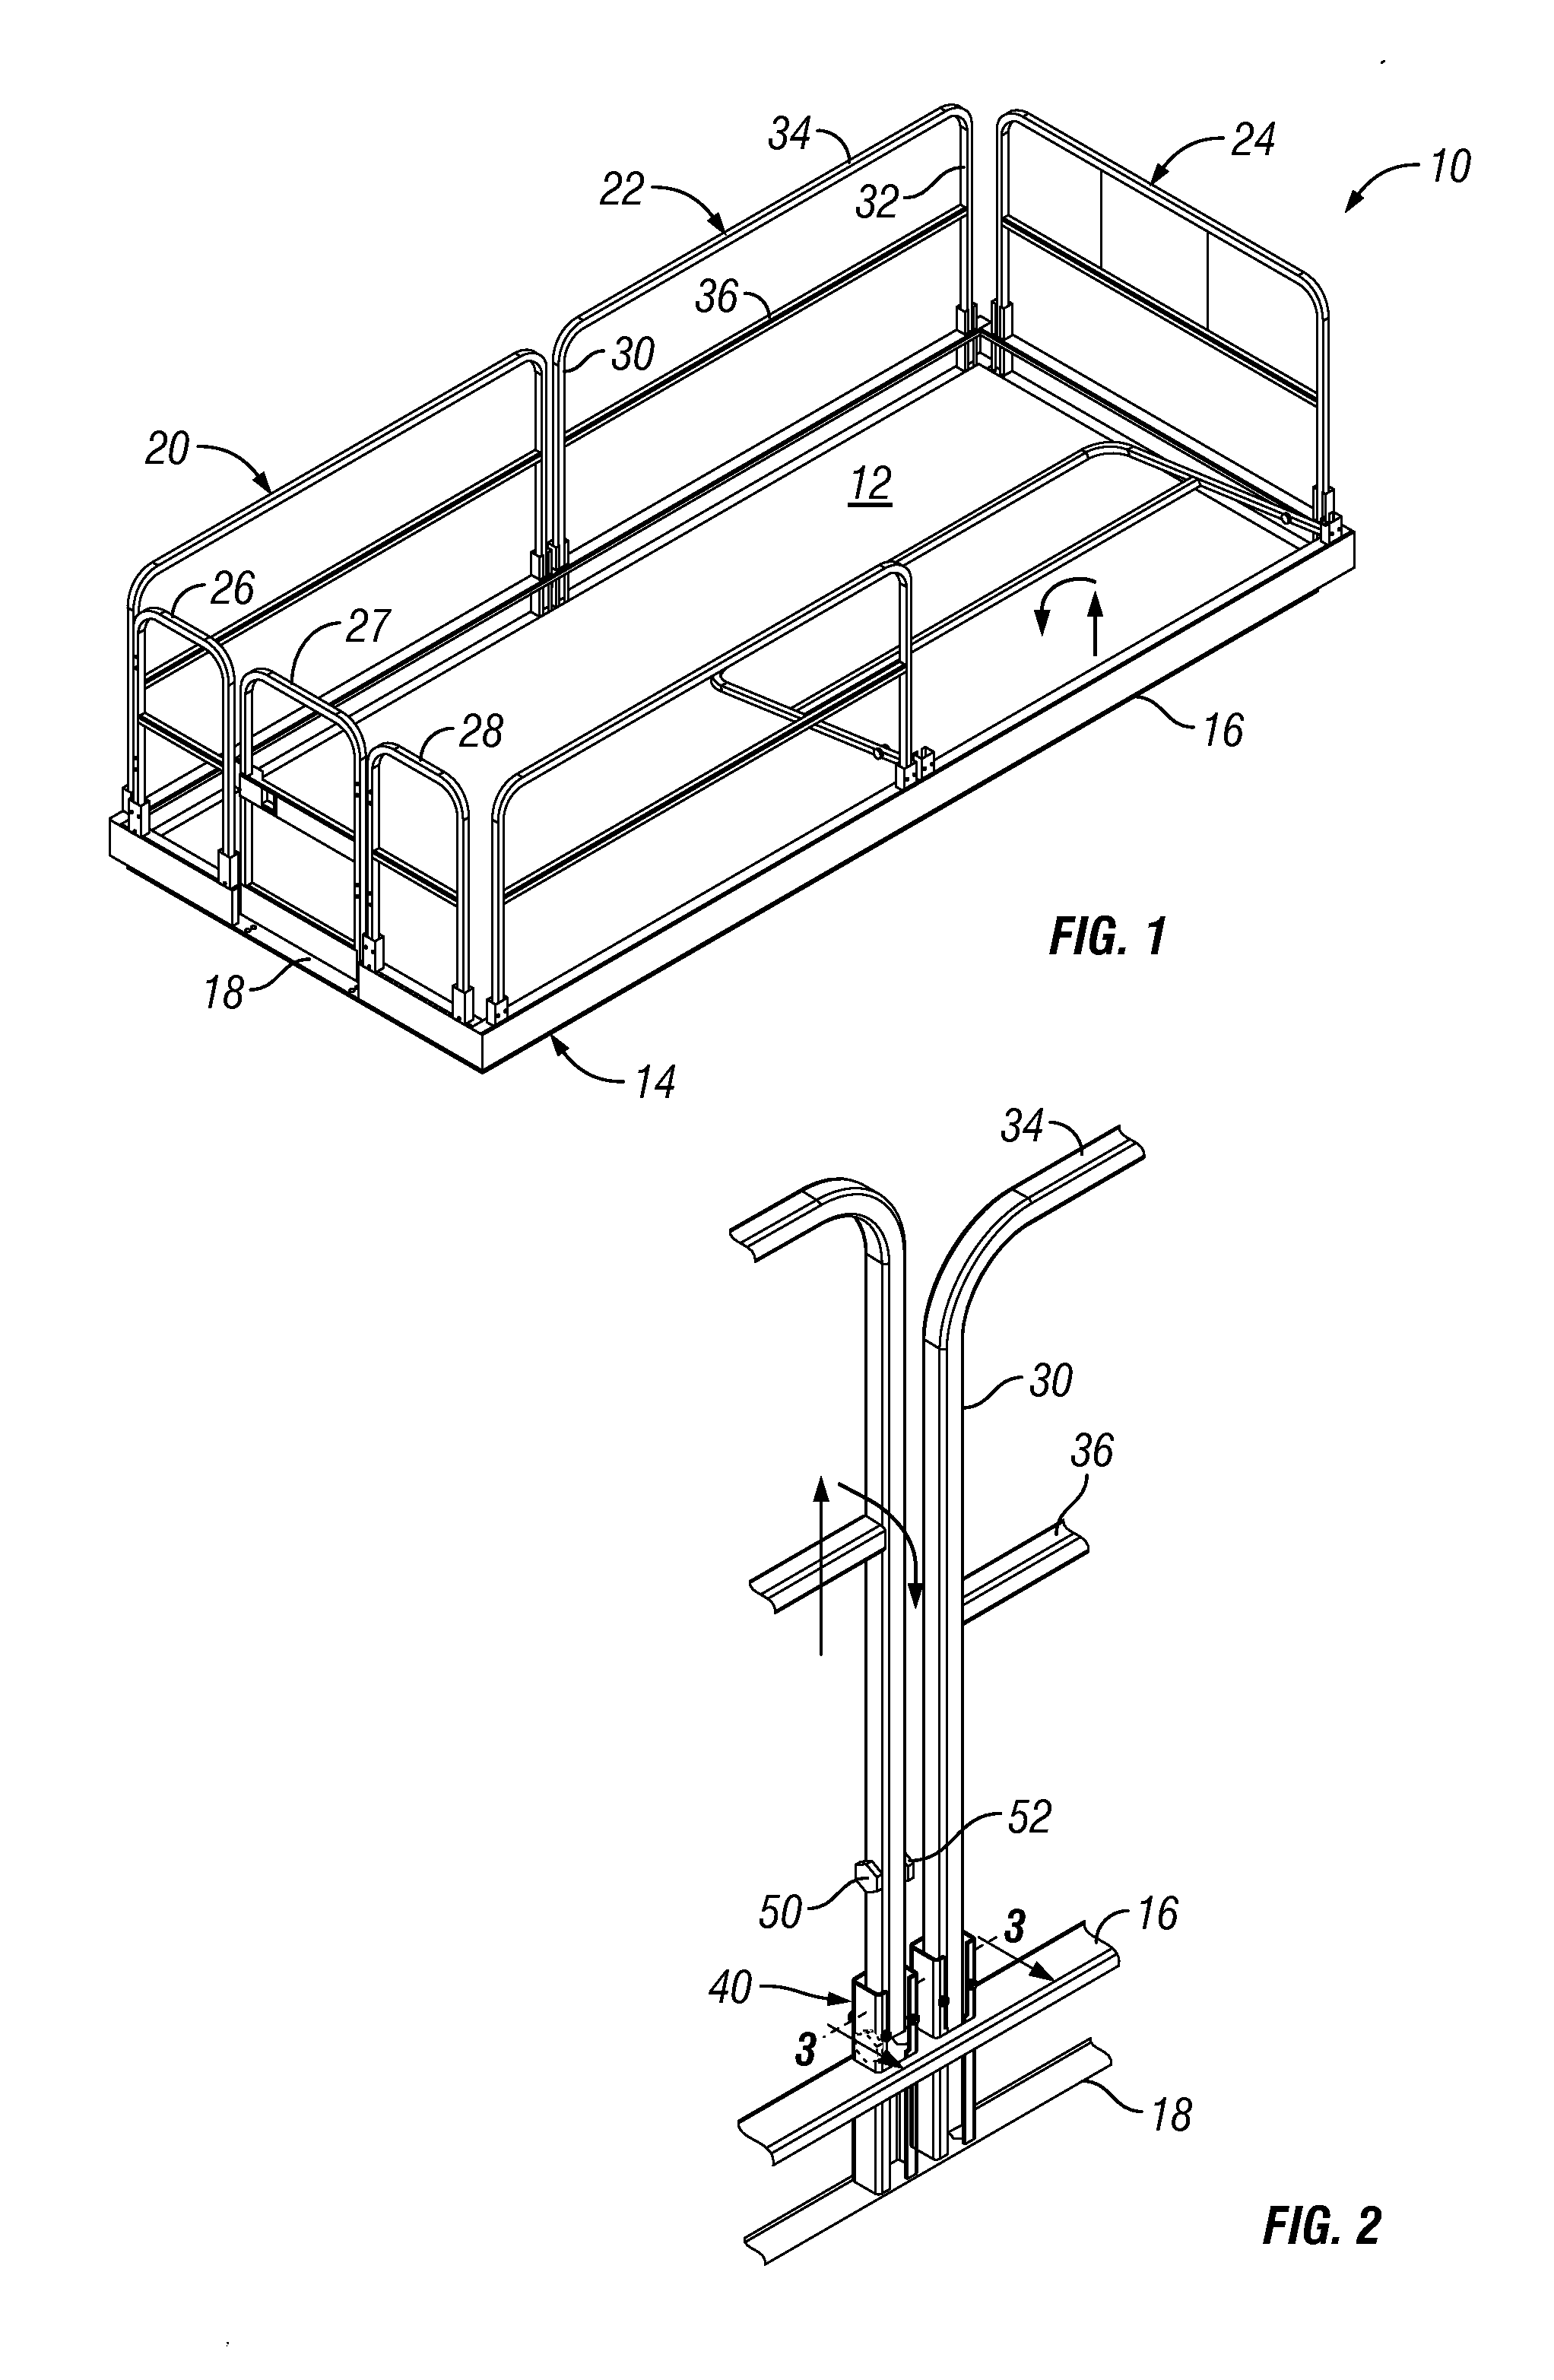 Aerial work platform and pinless guardrail